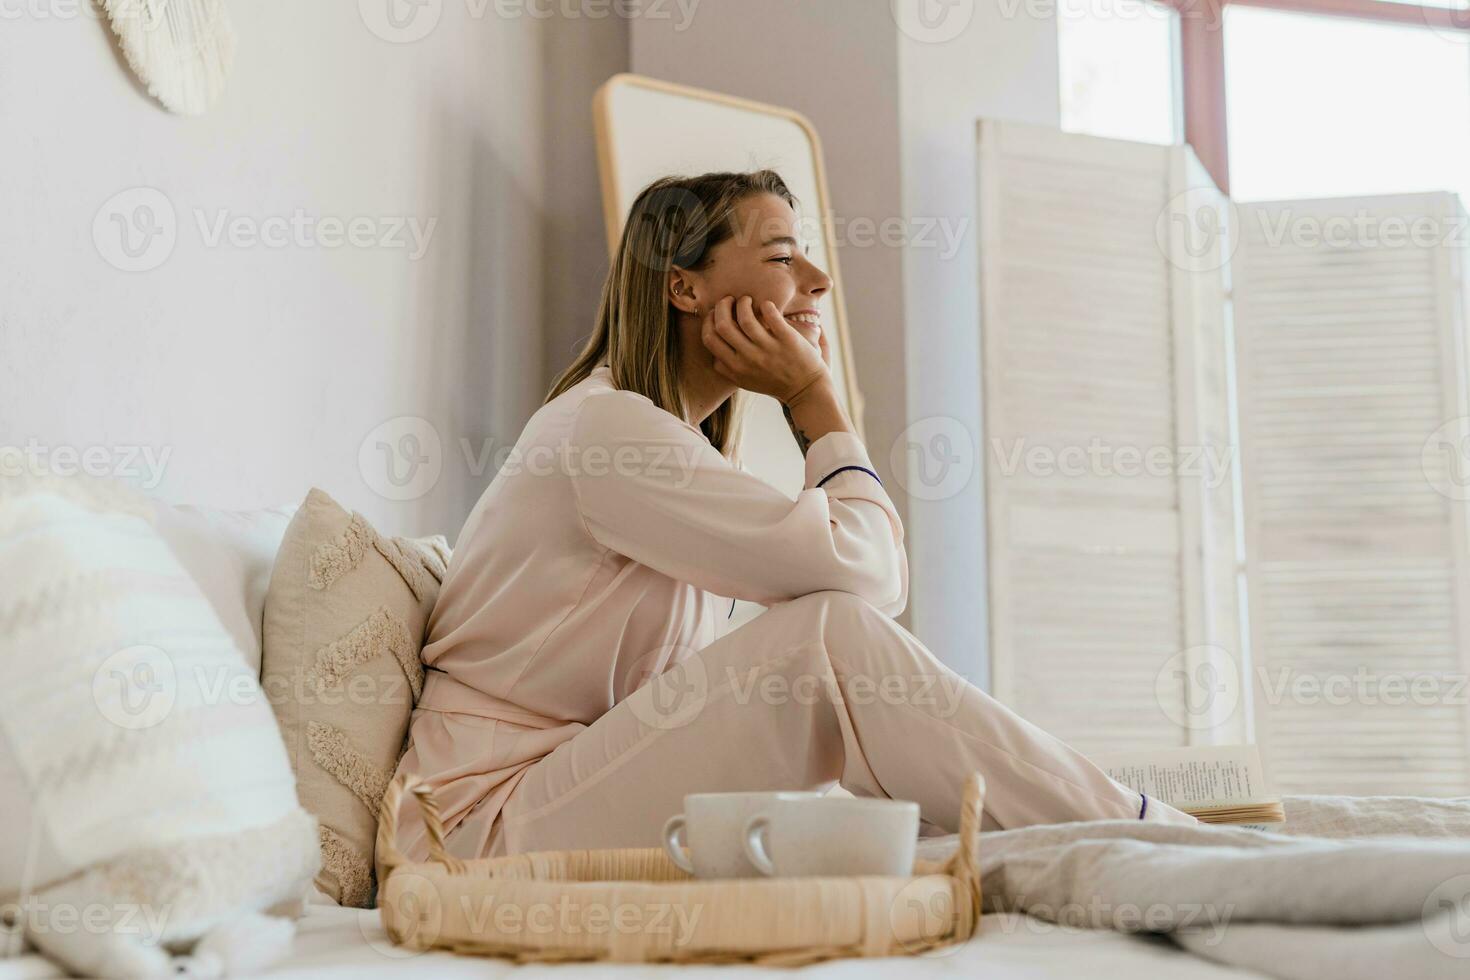 mooi glimlachen vrouw ontspannende Bij huis Aan bed in ochtend- in pyjama foto